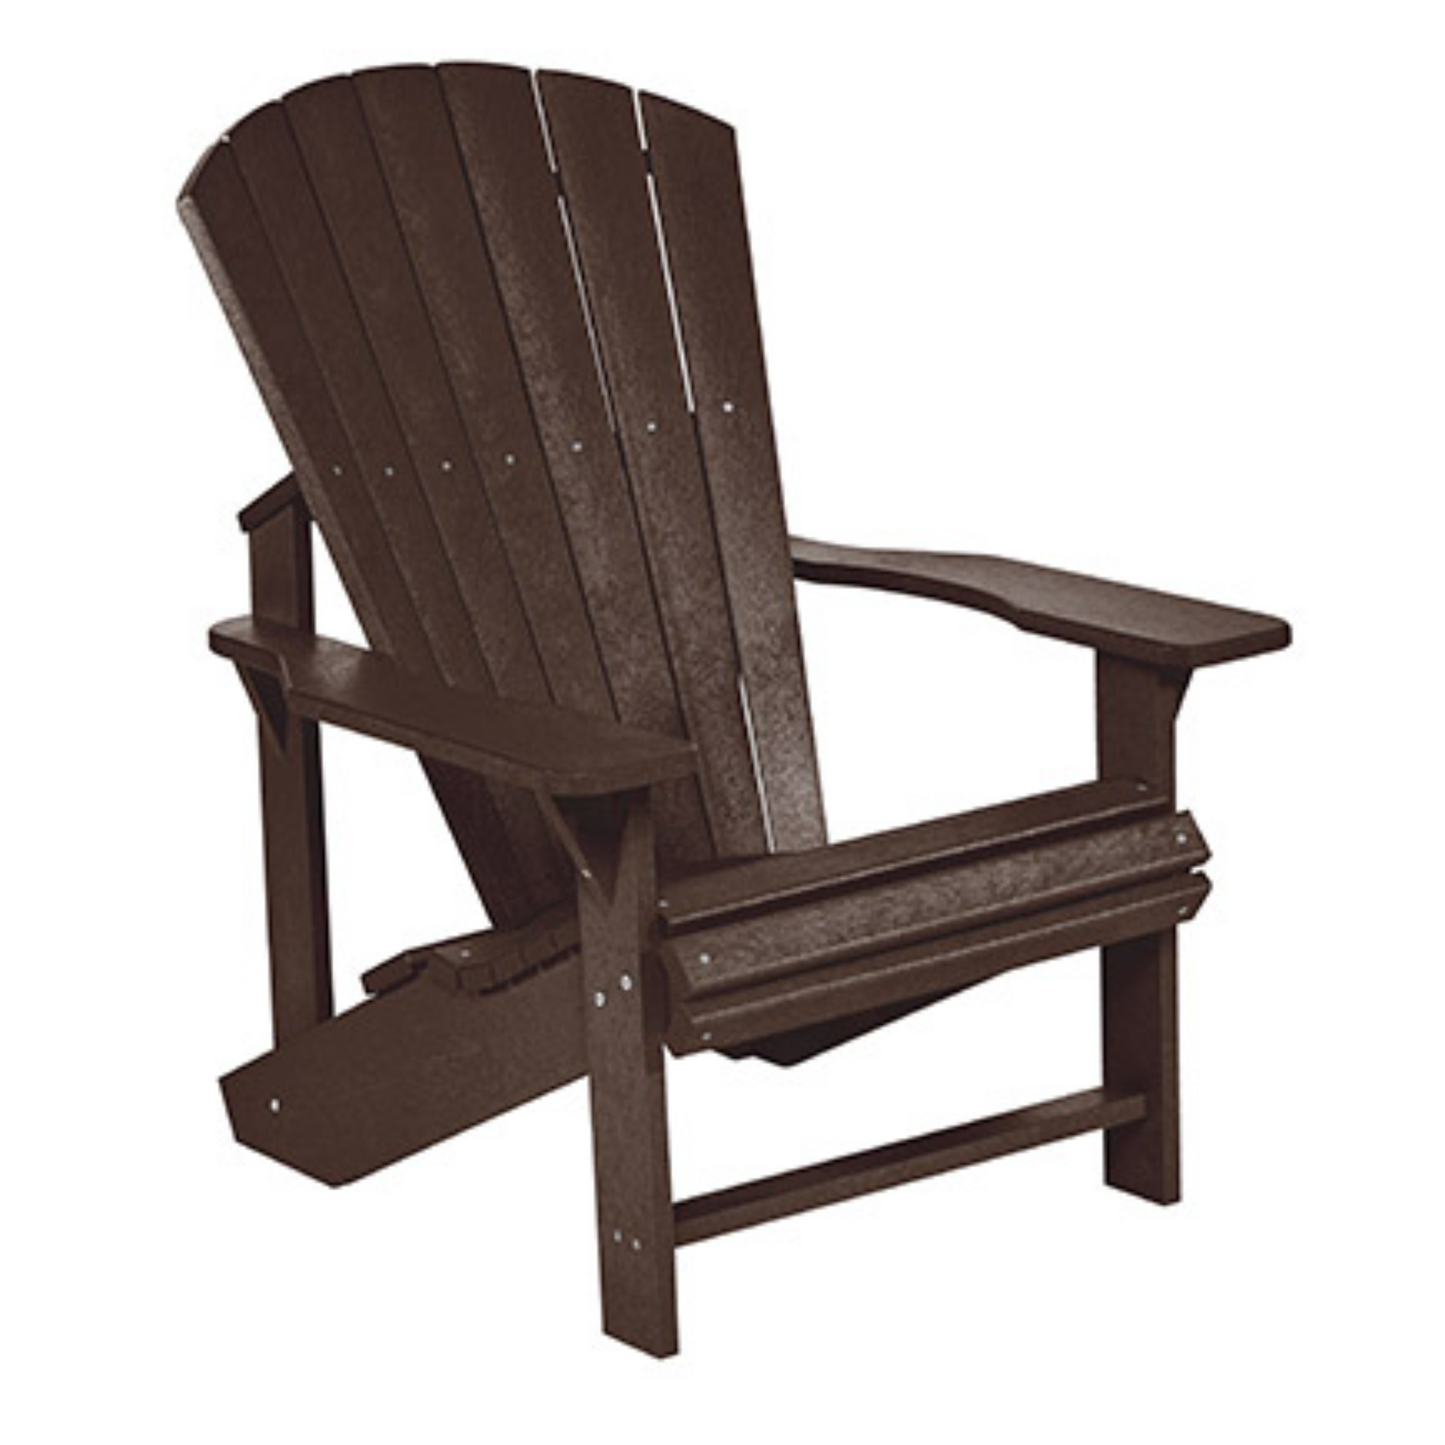 C.R.P. Upright Adirondack Chair In Chocolate